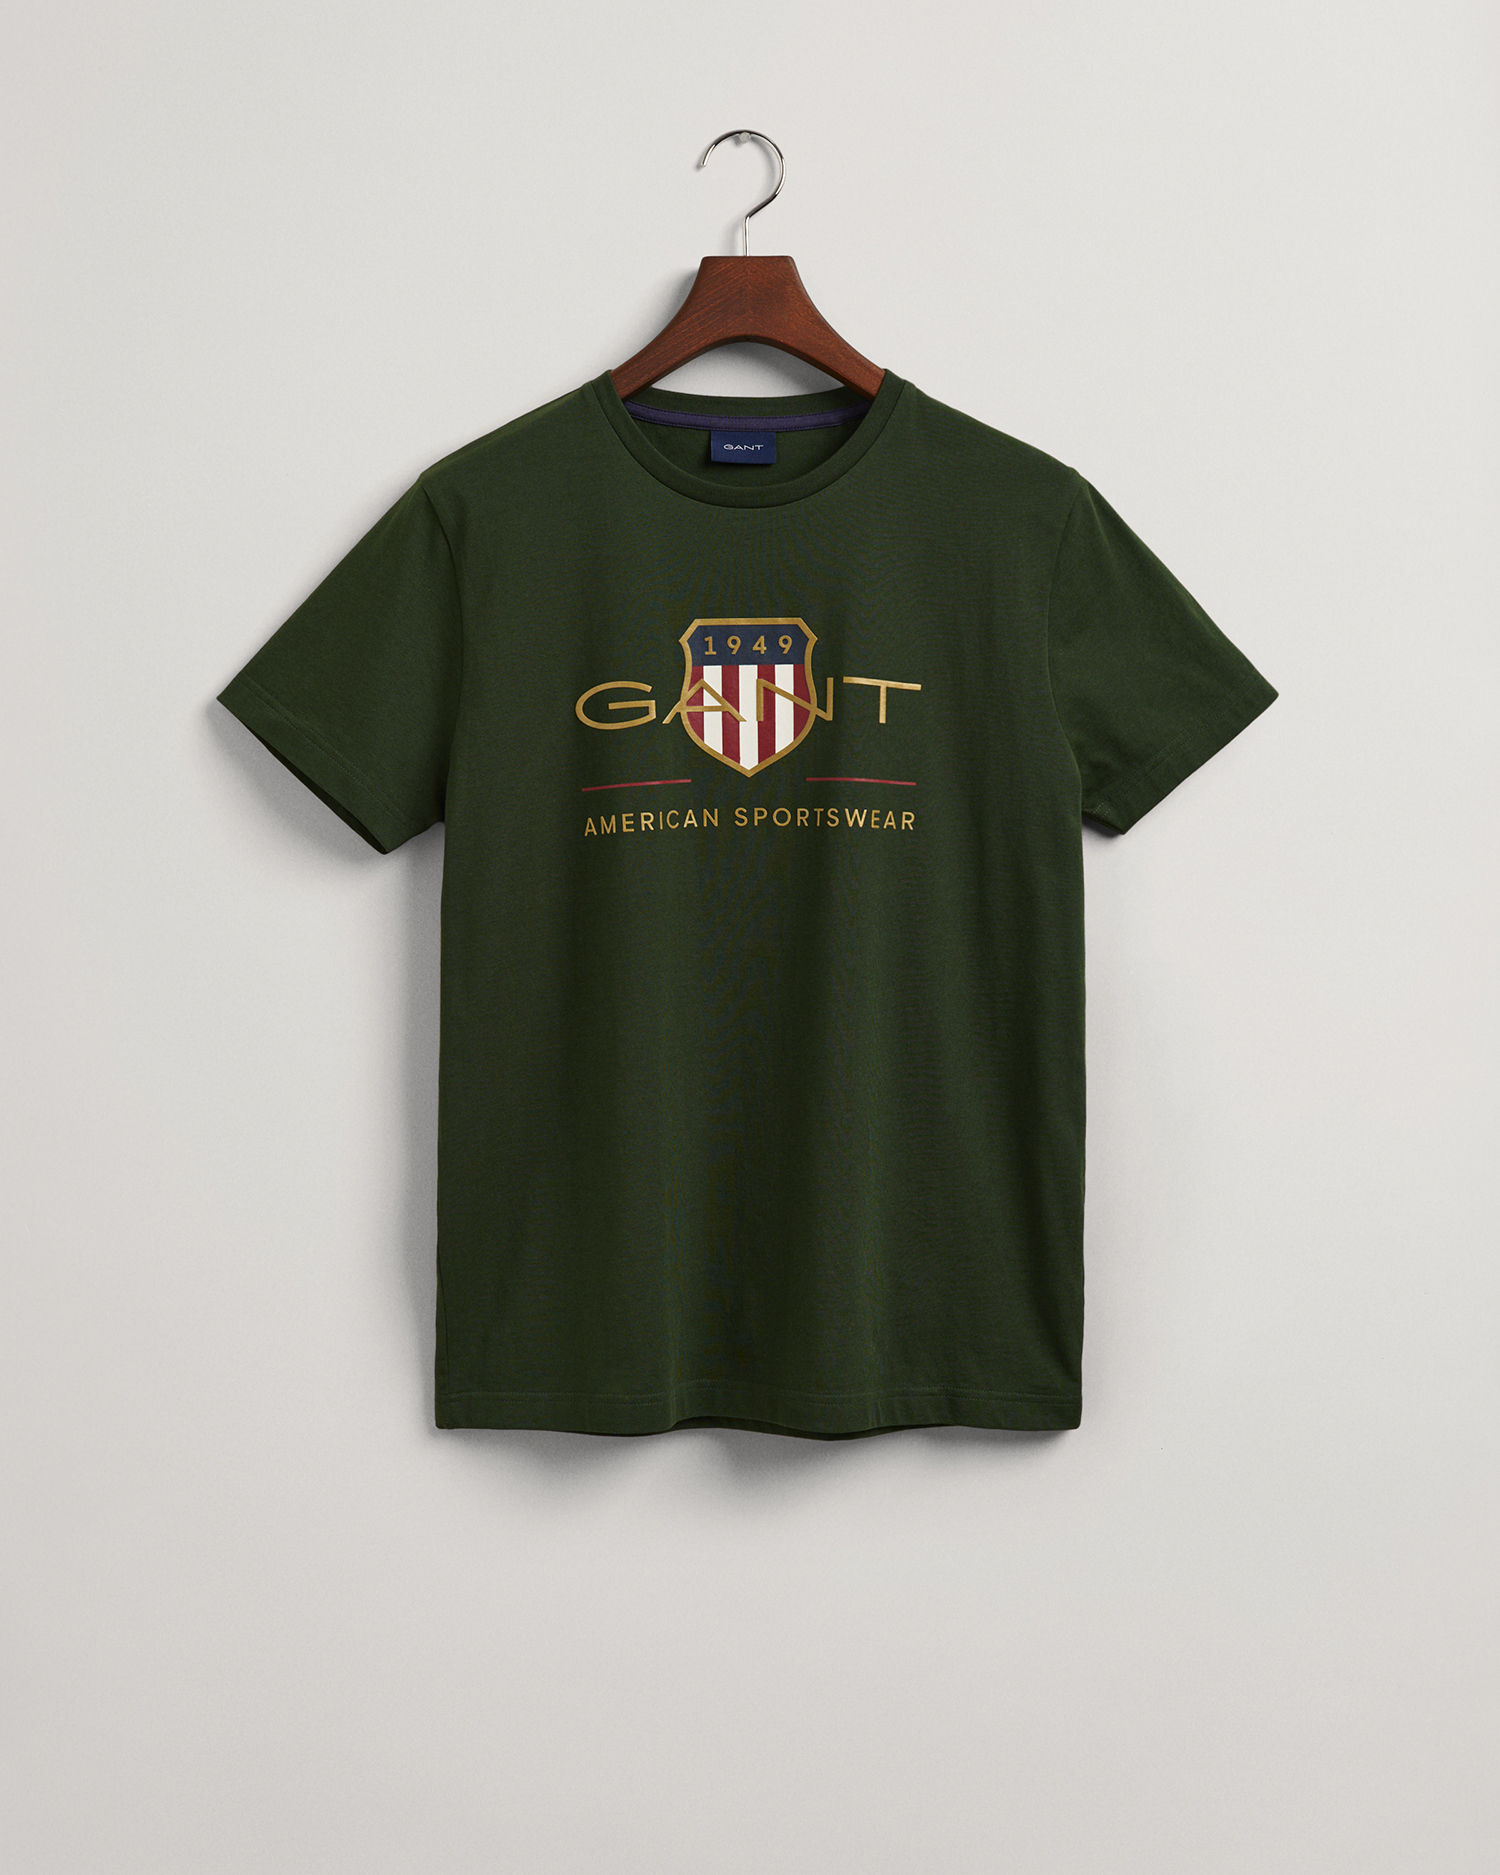 Archive Shield T-Skjorte med Stor Logo